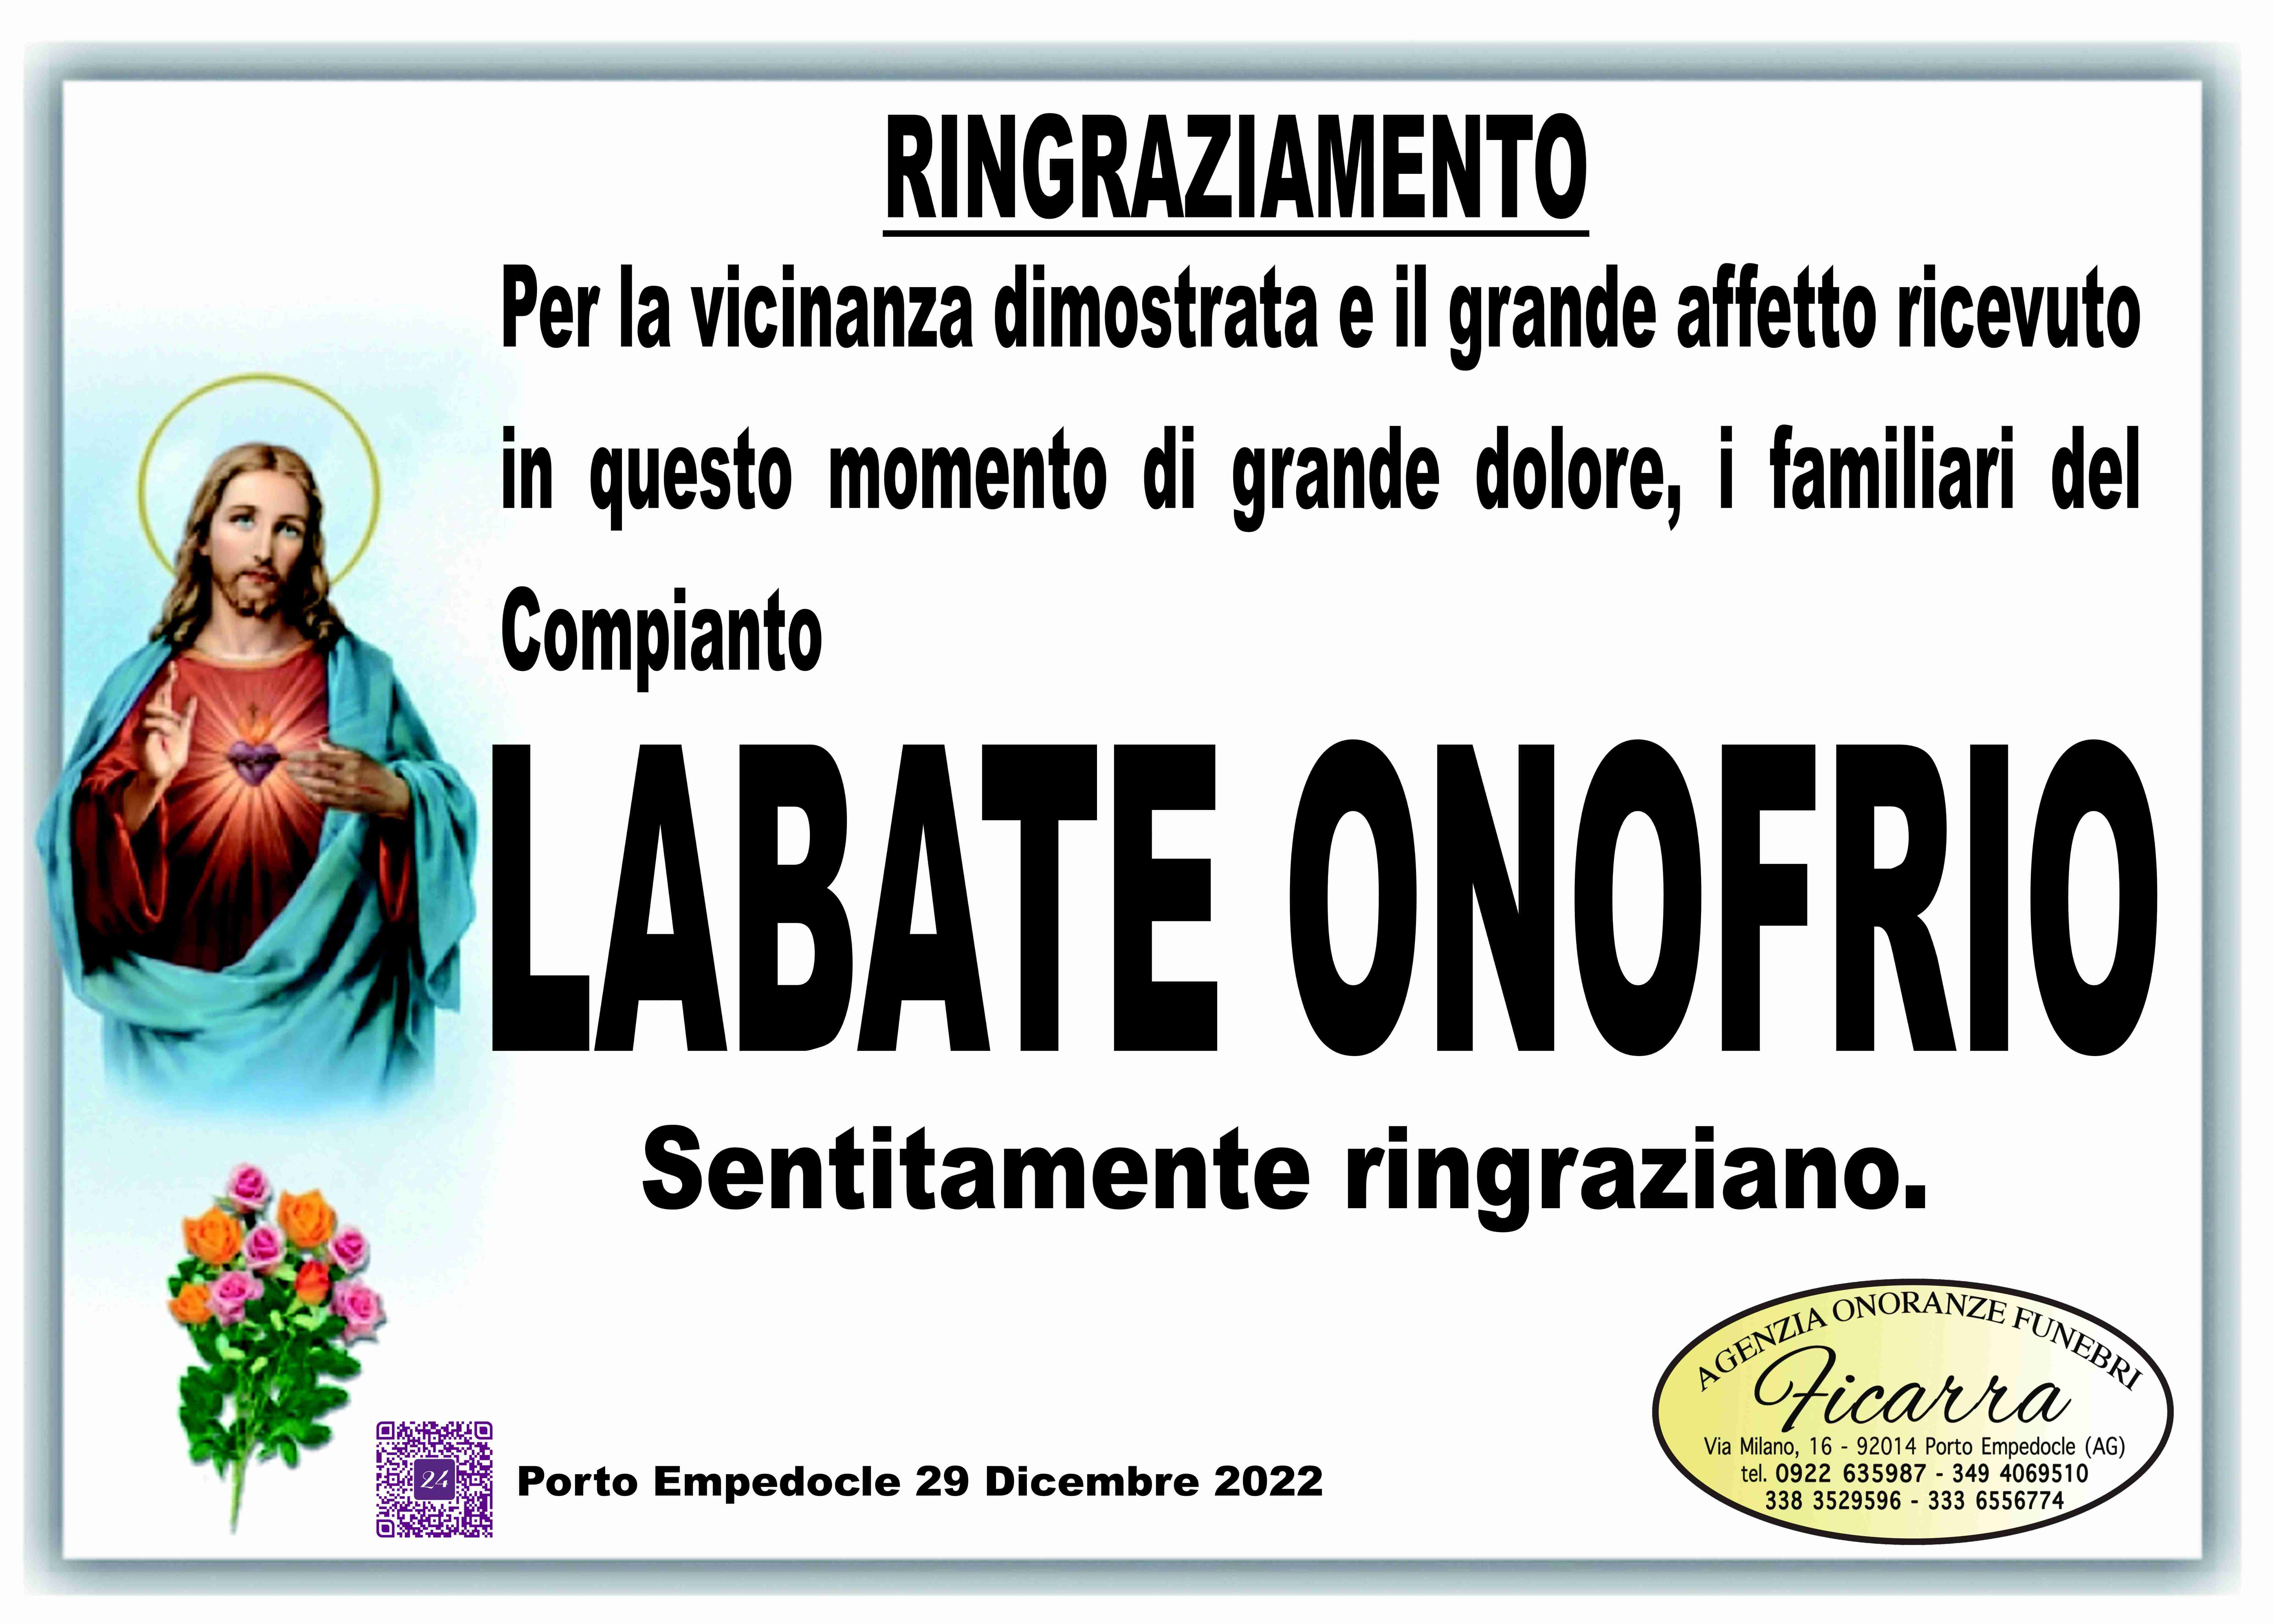 Onofrio Labate